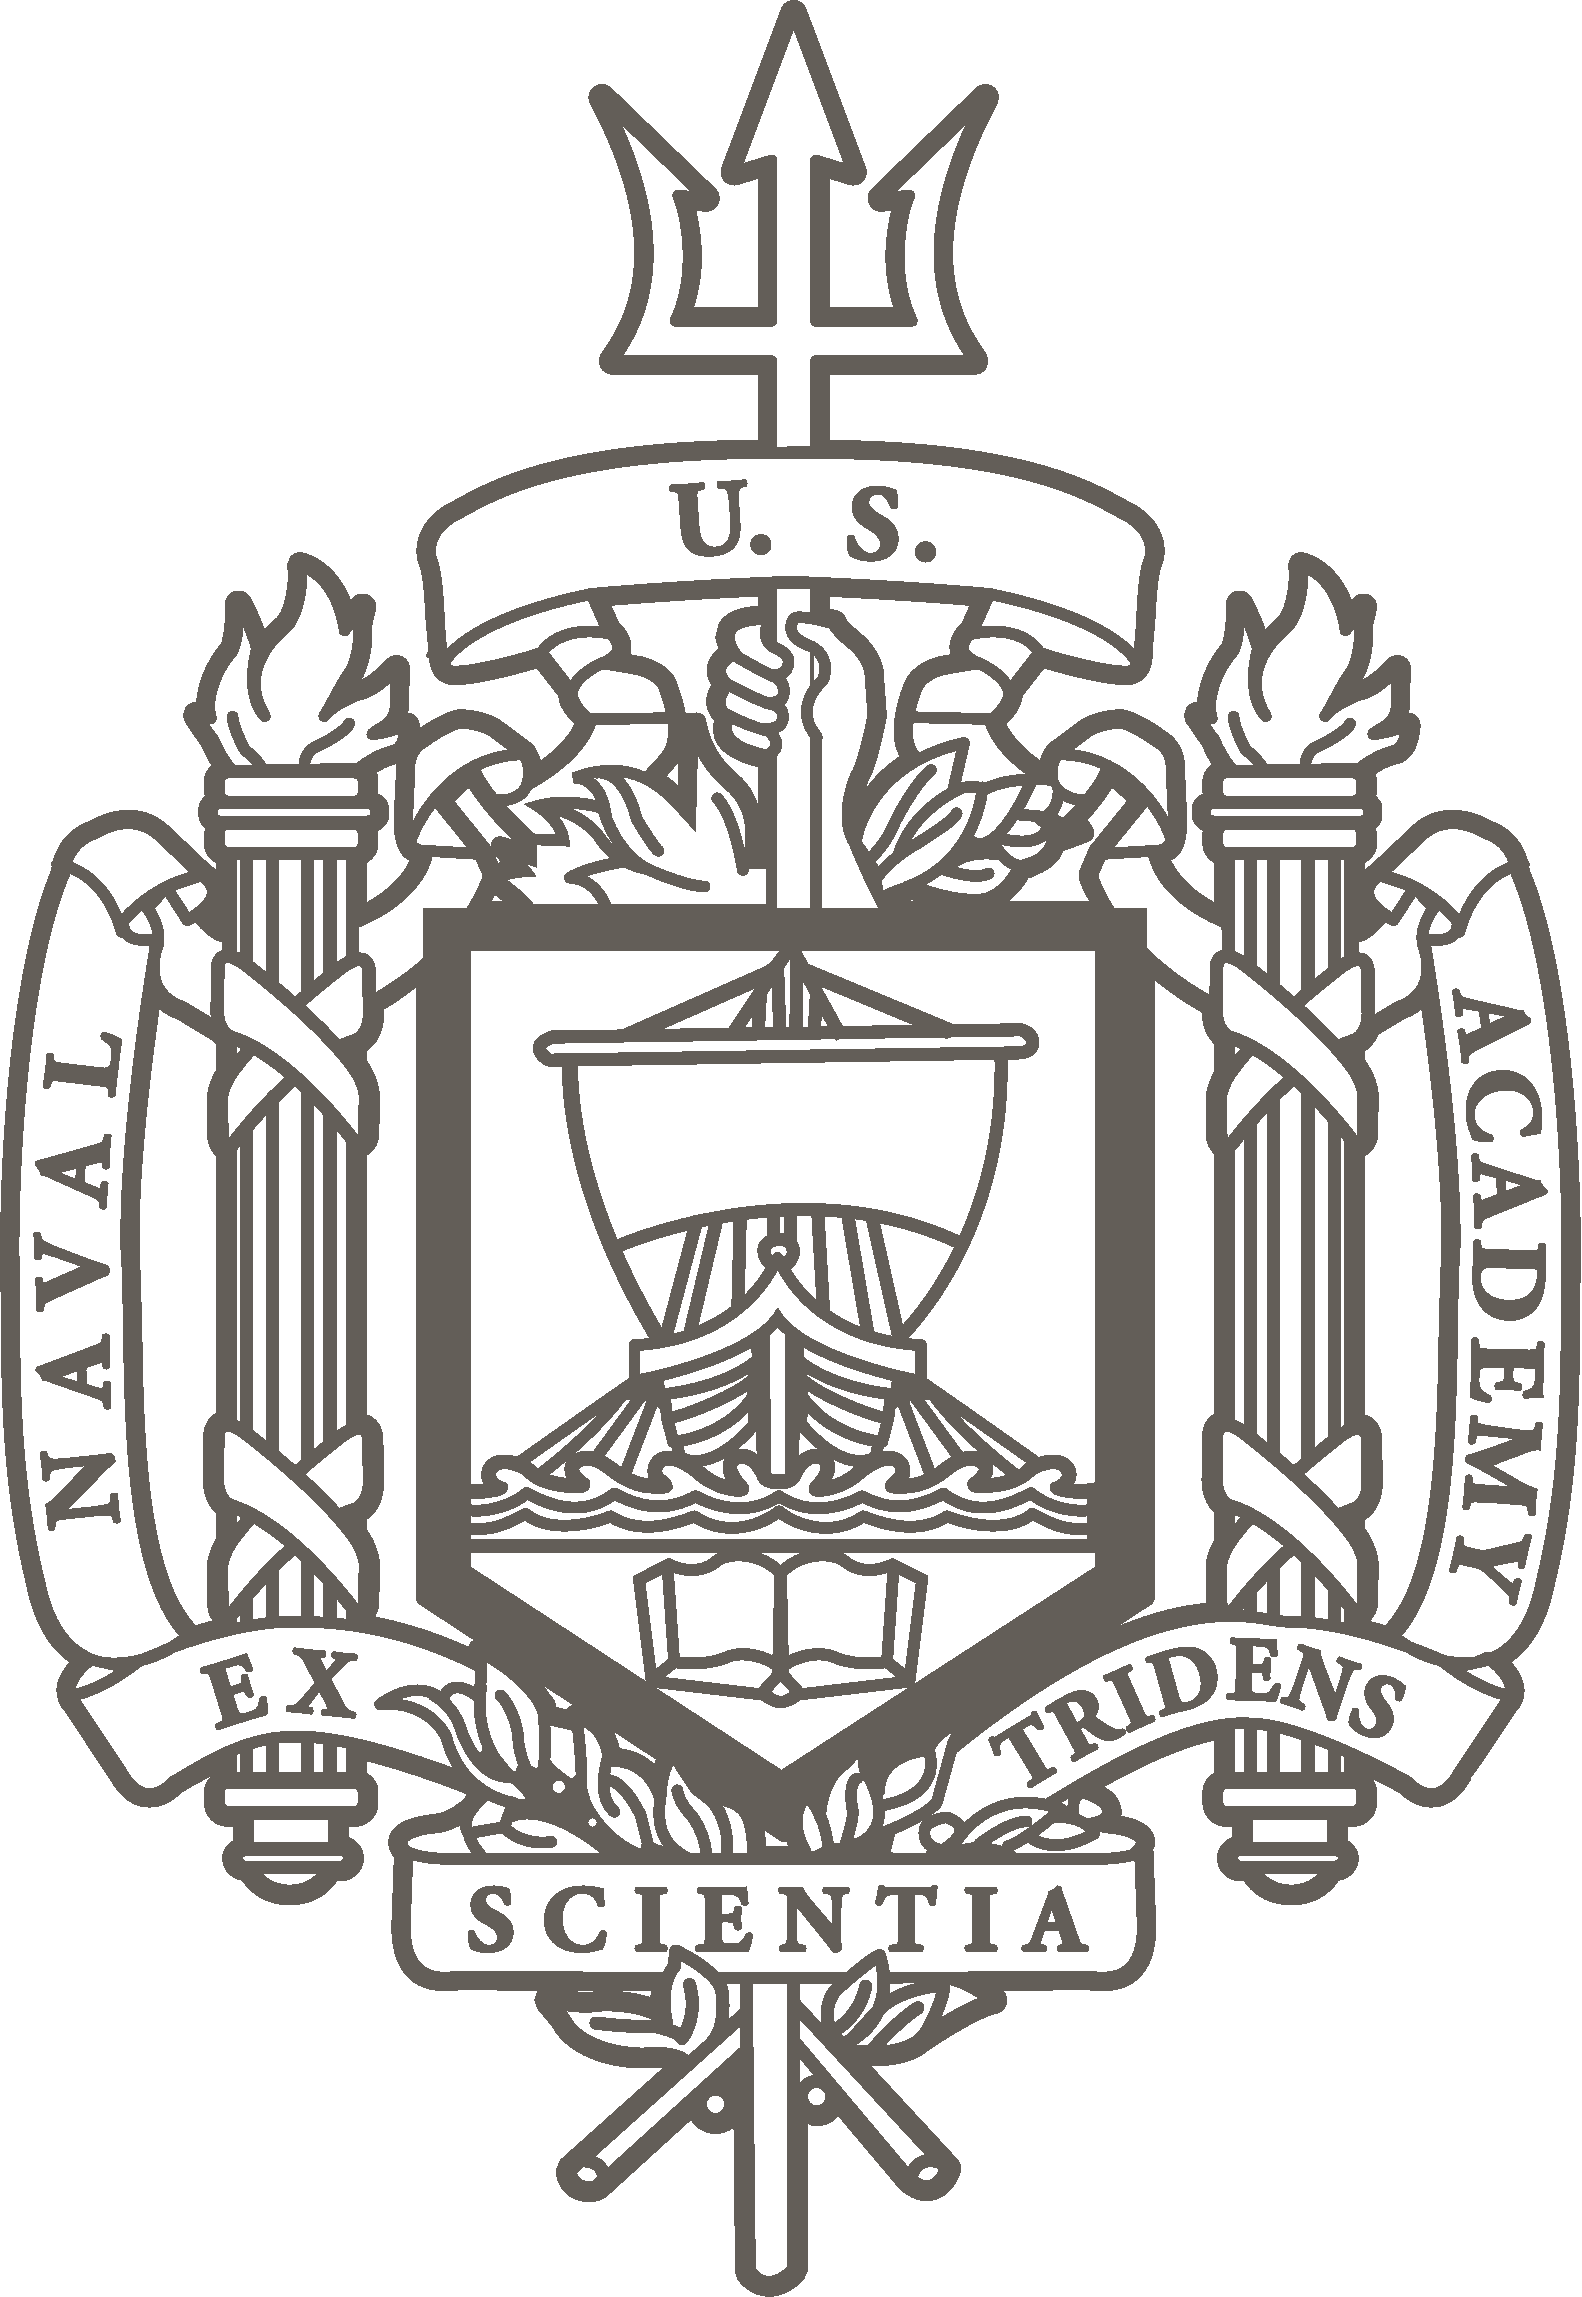 USNA Logo - United States Naval Academy Logo [USNA] Free Vector Download ...